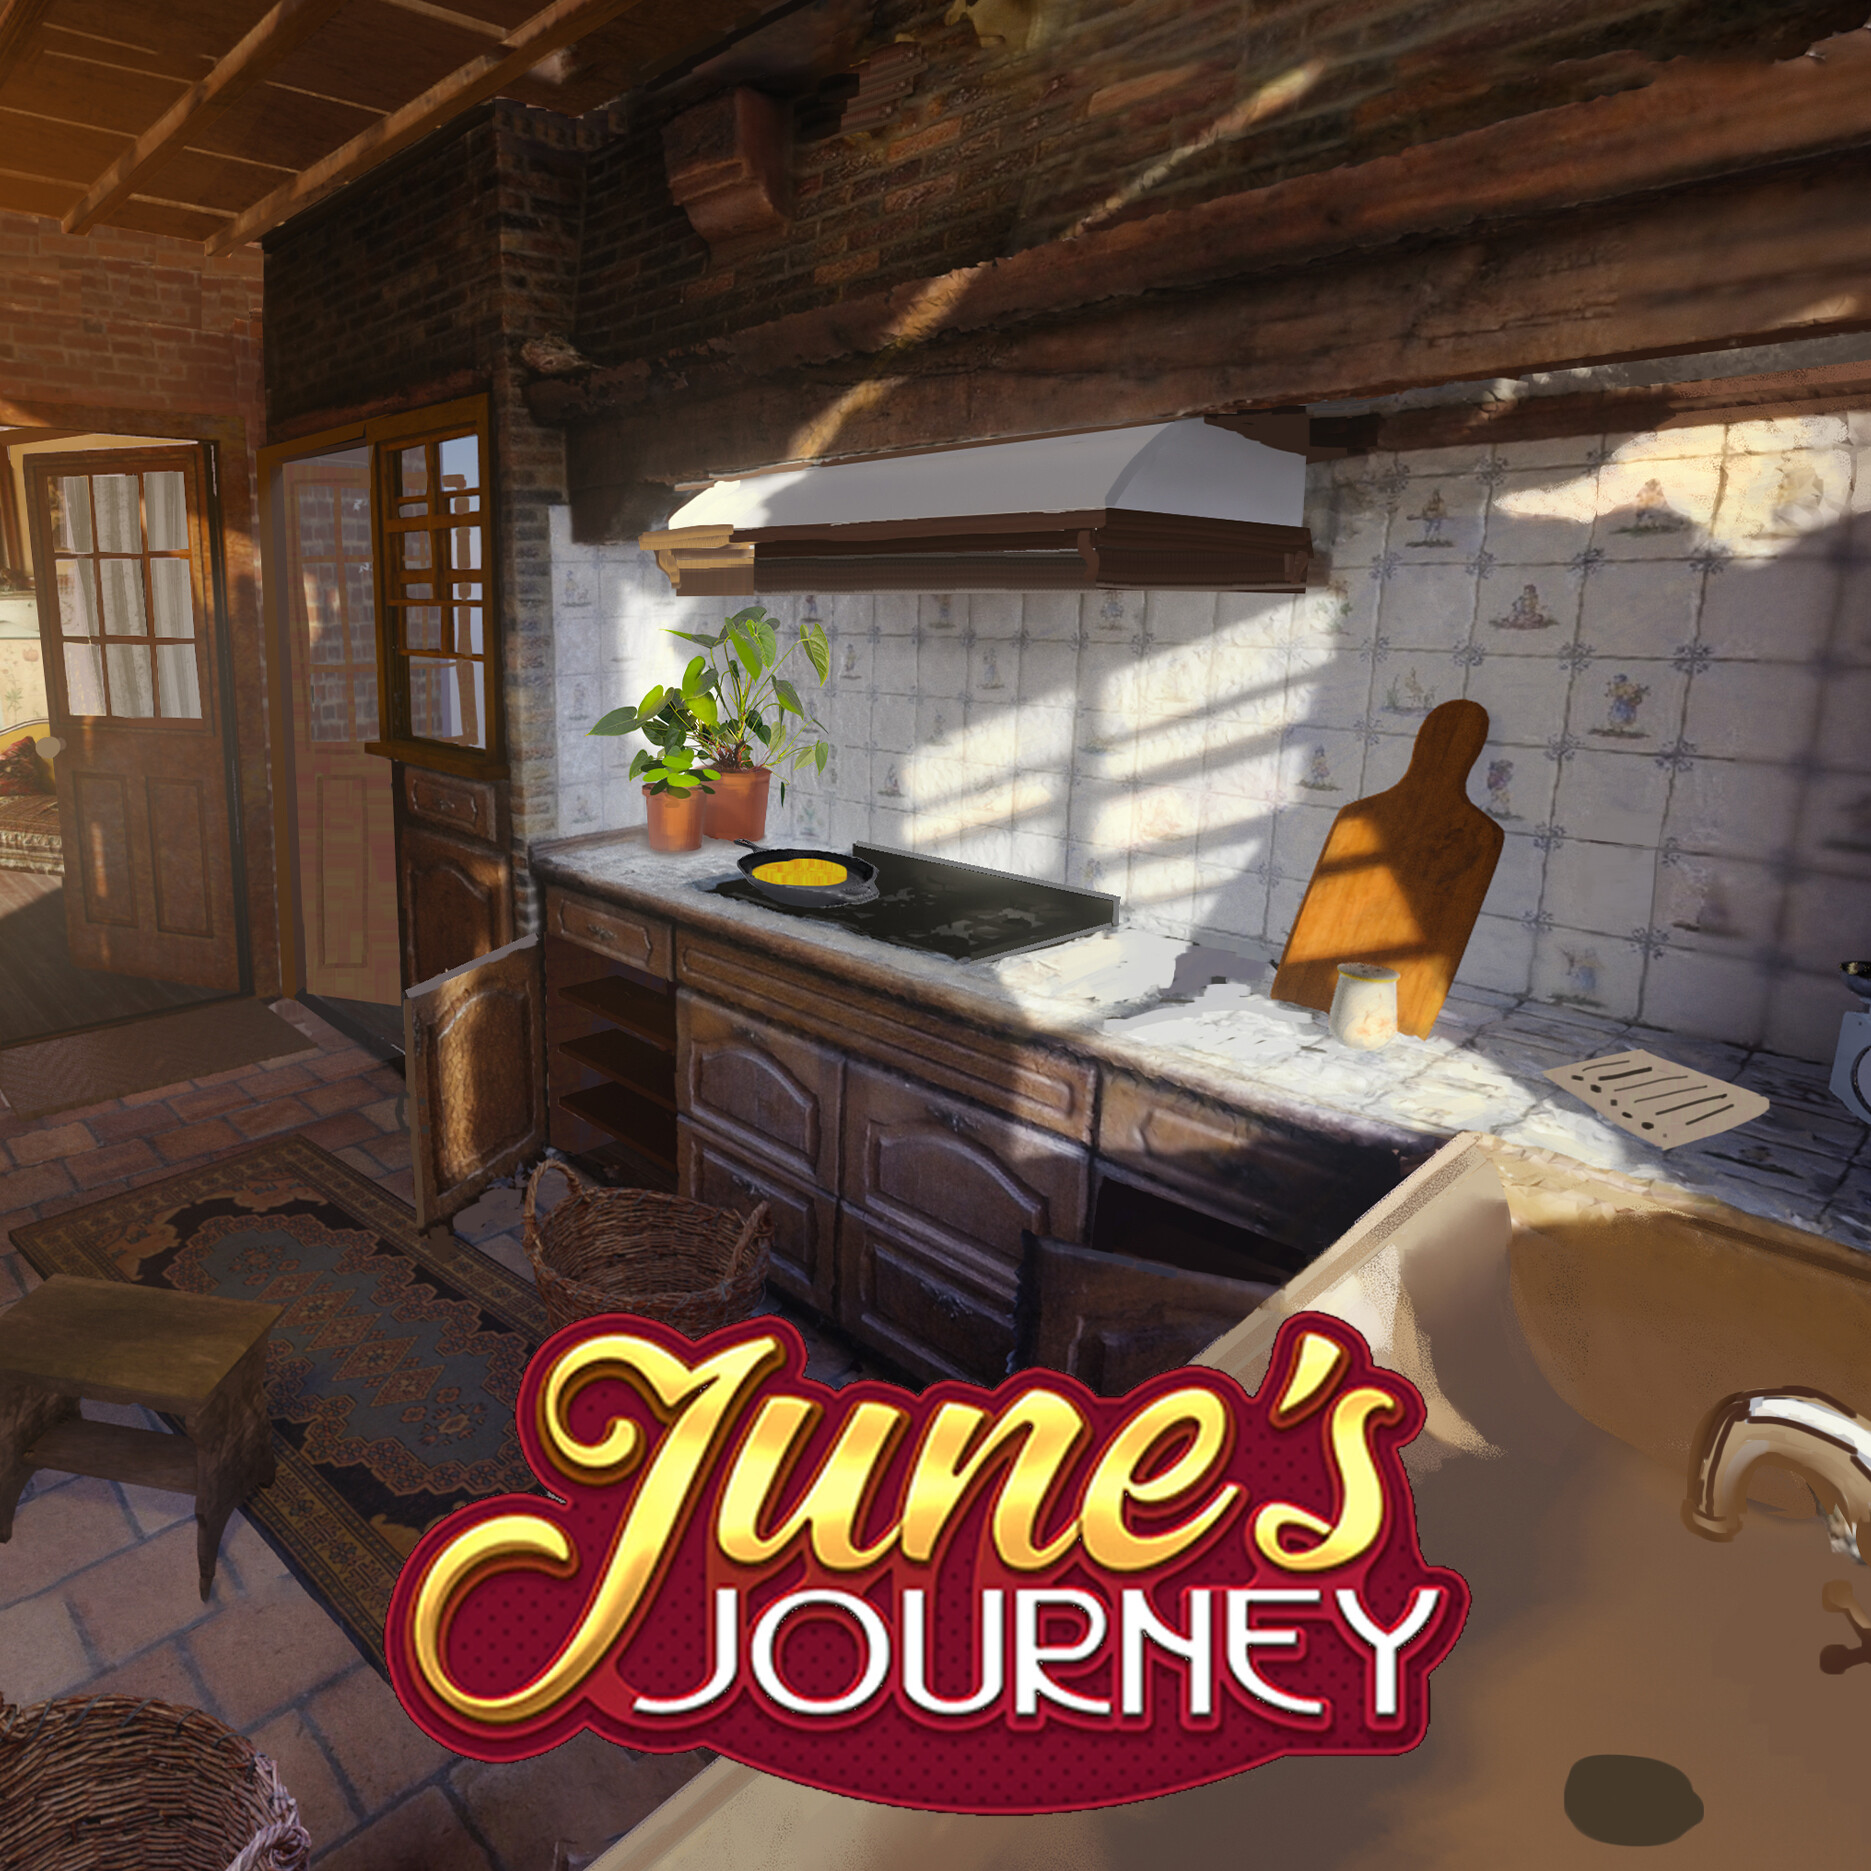 june's journey estate kitchen oven hook